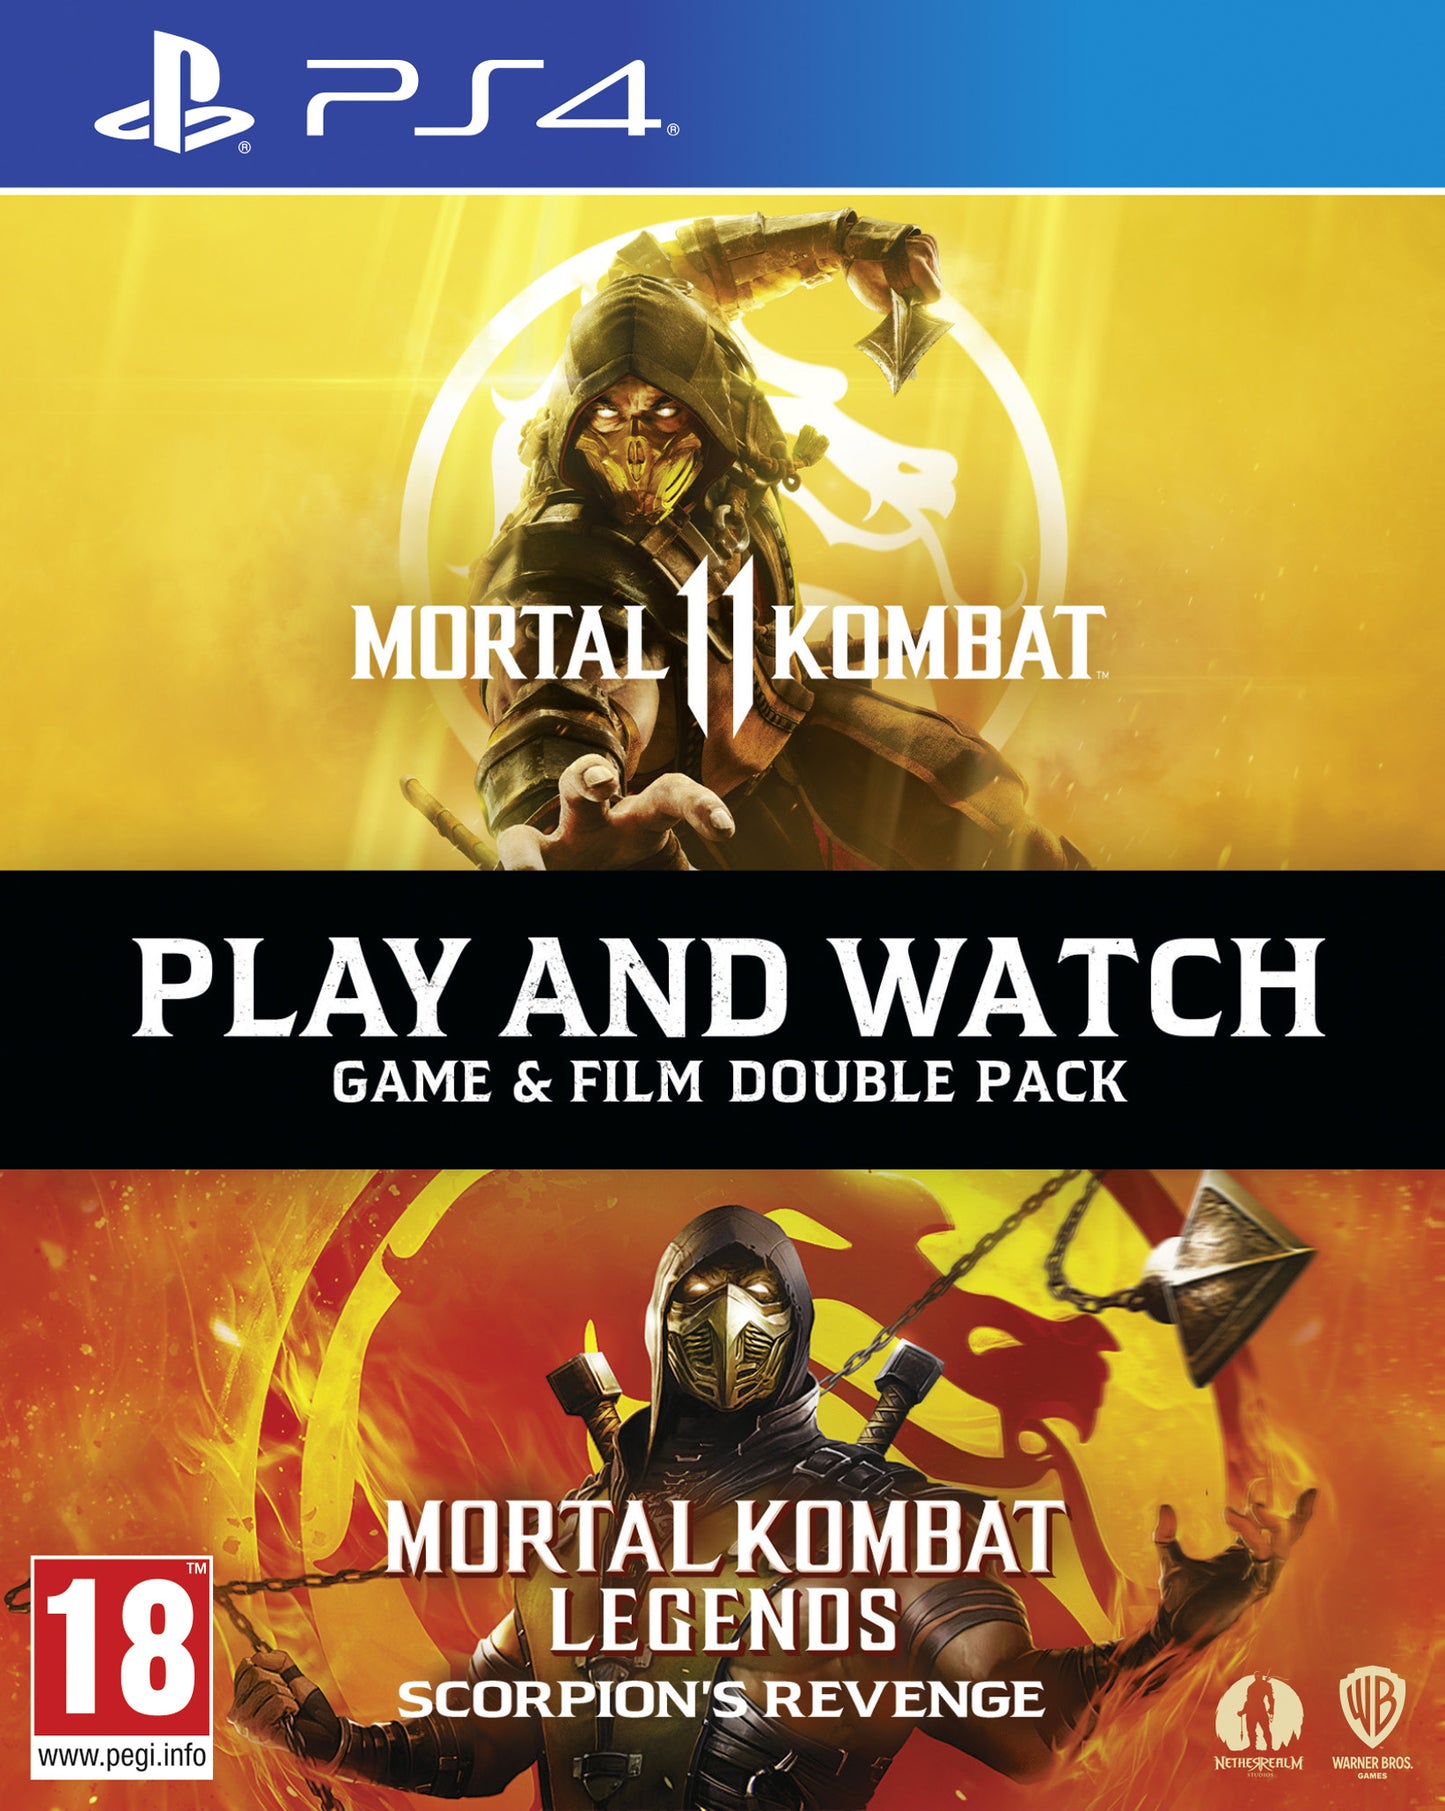 Mortal Kombat Bundle Mortal Kombat 11 and Mortal Kombat Legends scorpions revenge Movie for PS4